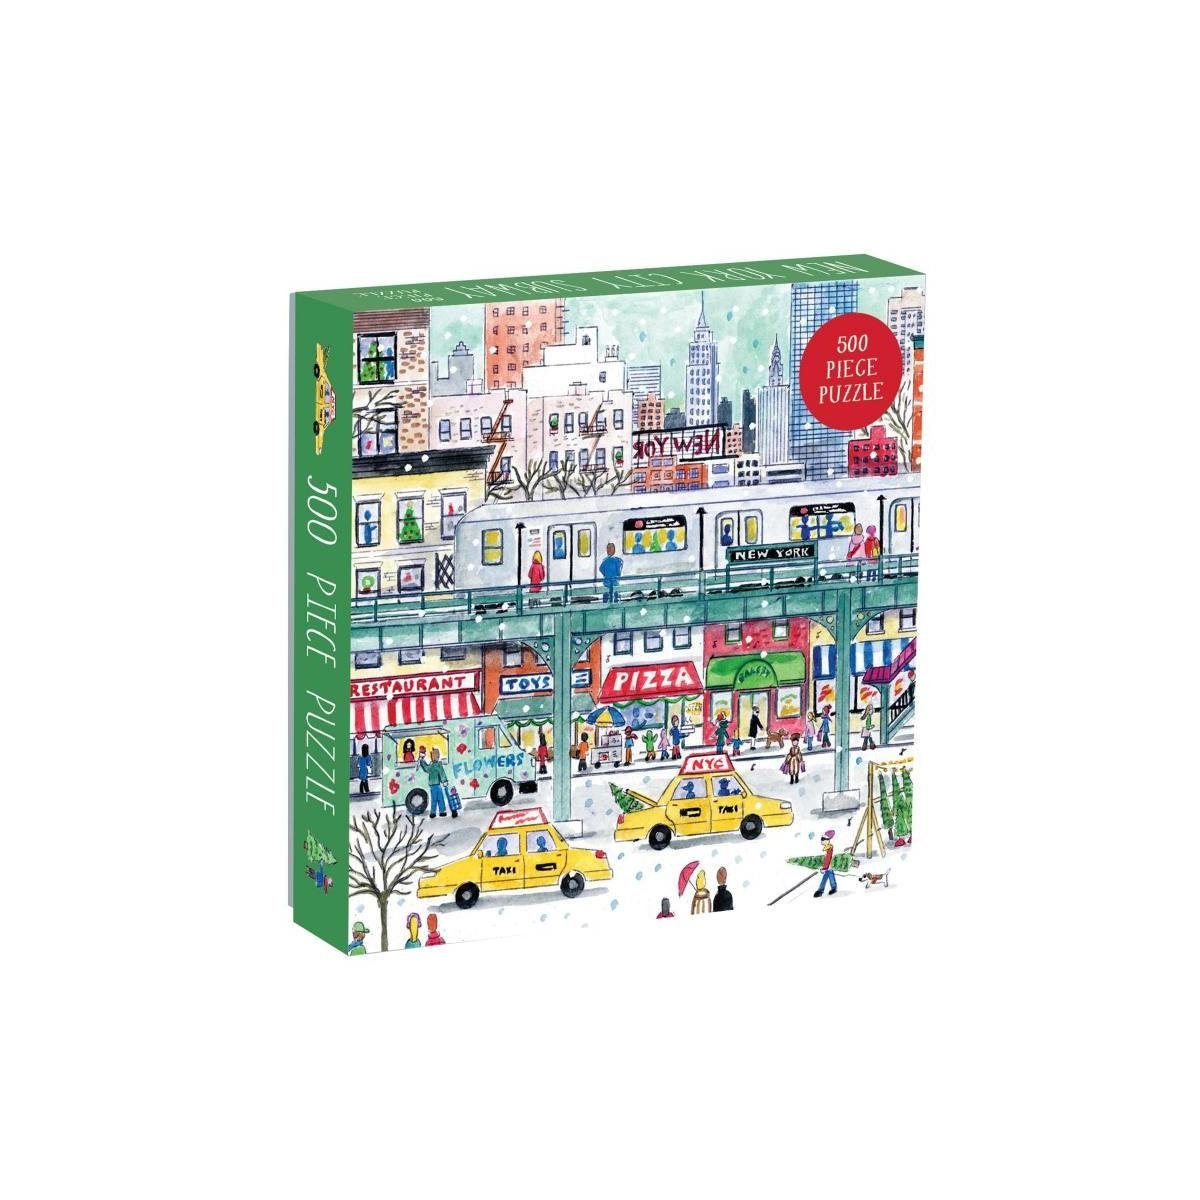 abrams&chronicle Puzzle 53091 - Michael Storrings New York City Subway - Puzzle,..., 500 Puzzleteile